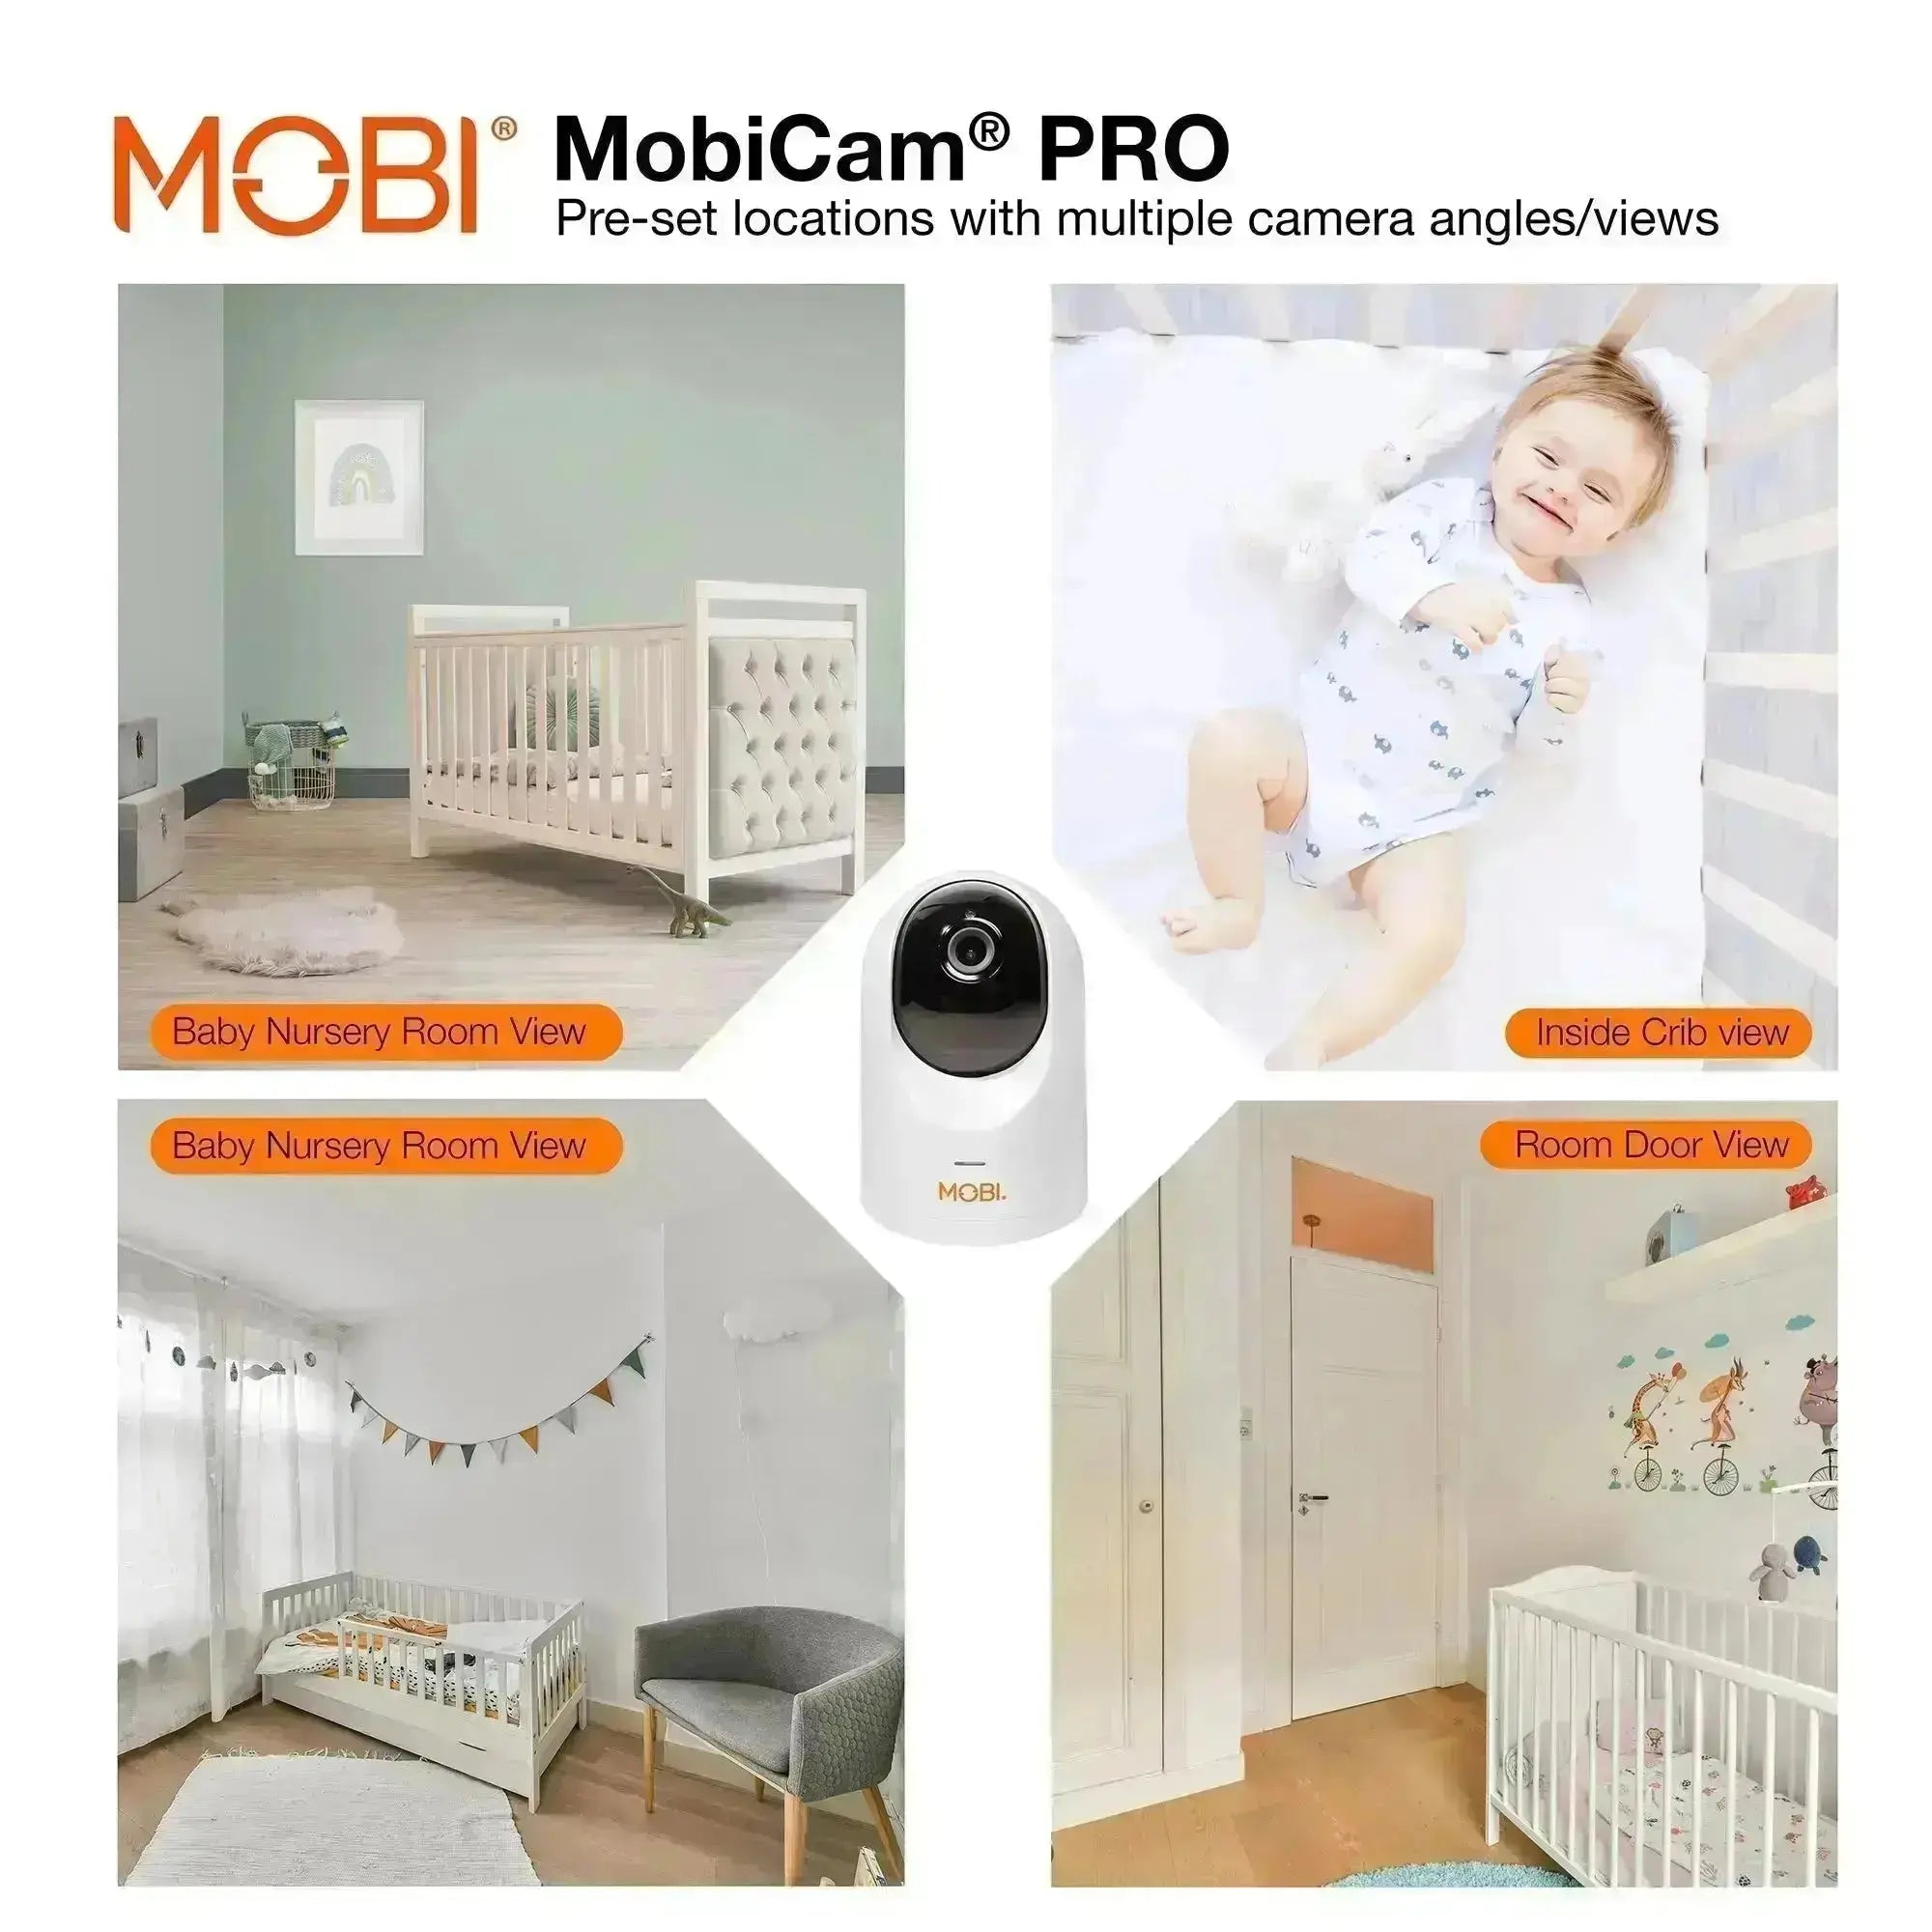 MobiCam PRO Intelligent Nursery Monitoring Camera